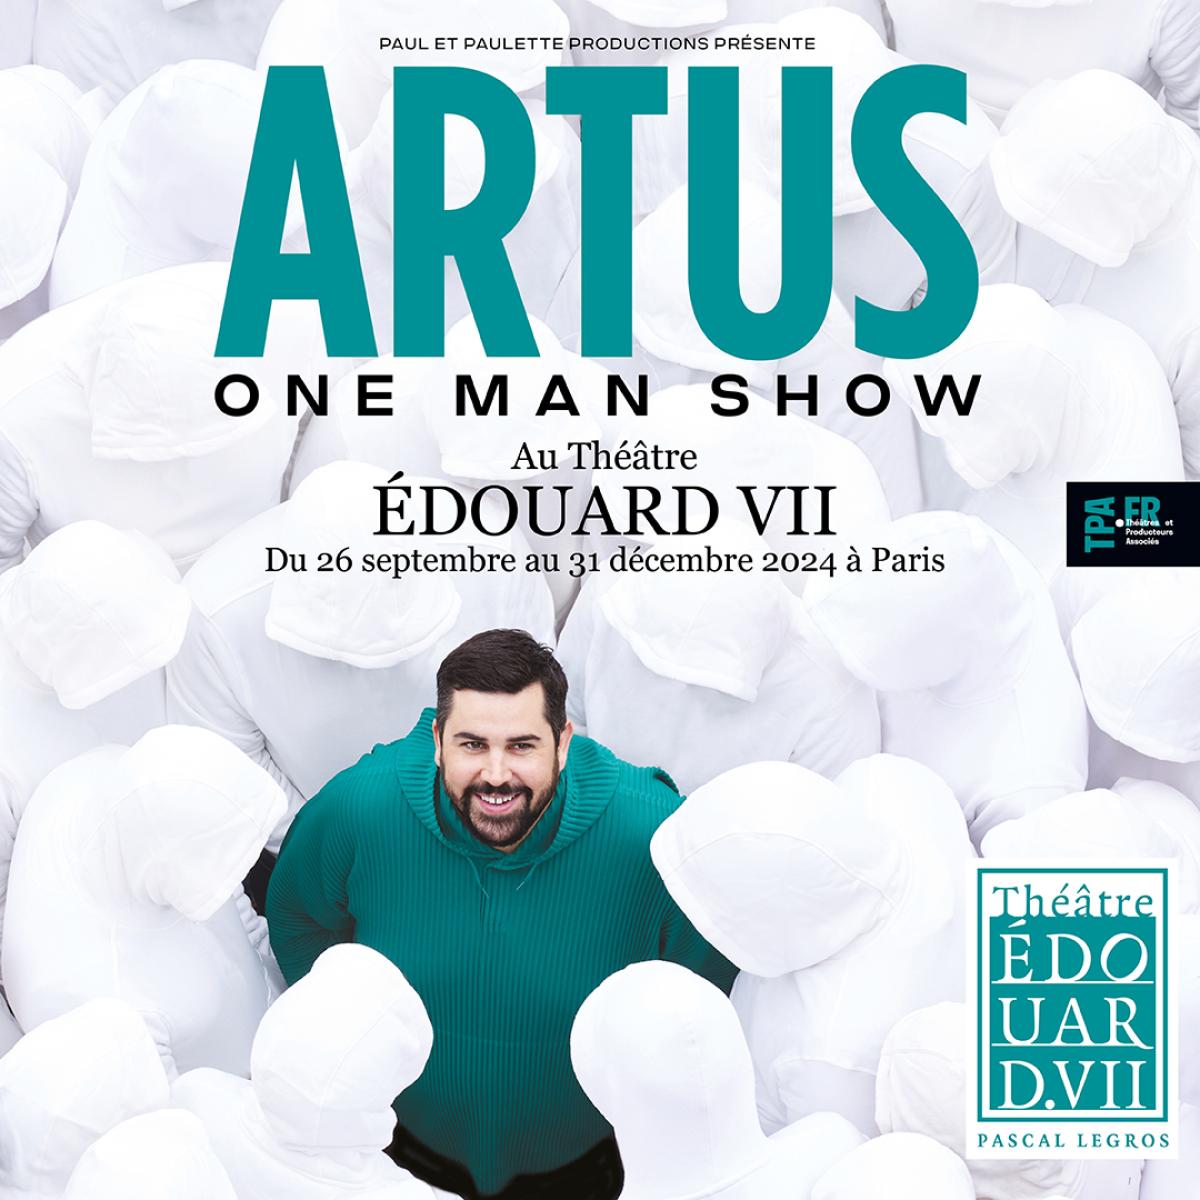 Artus - One Man Show al Theatre Edouard VII Tickets